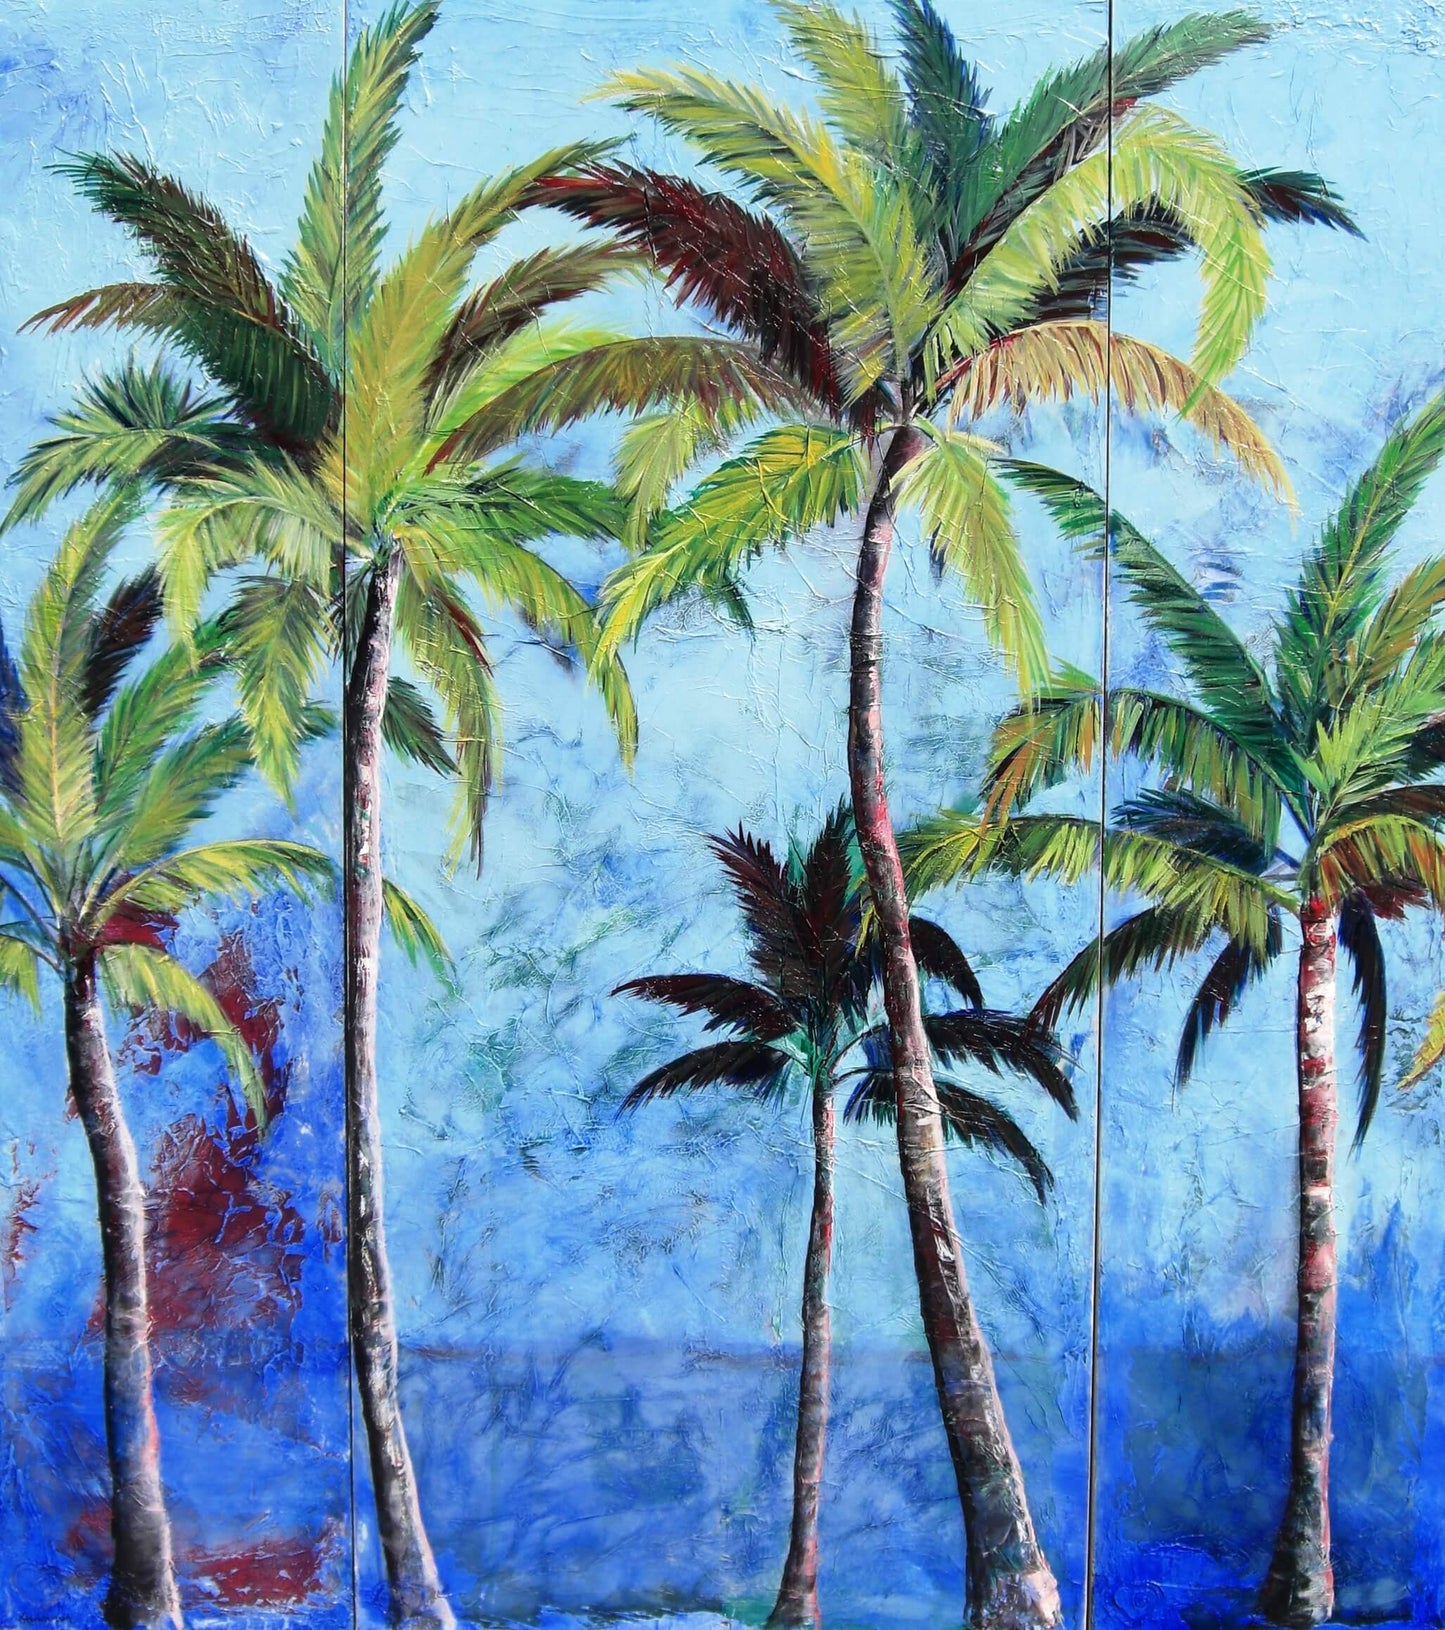 "Princeville Palms Painting"